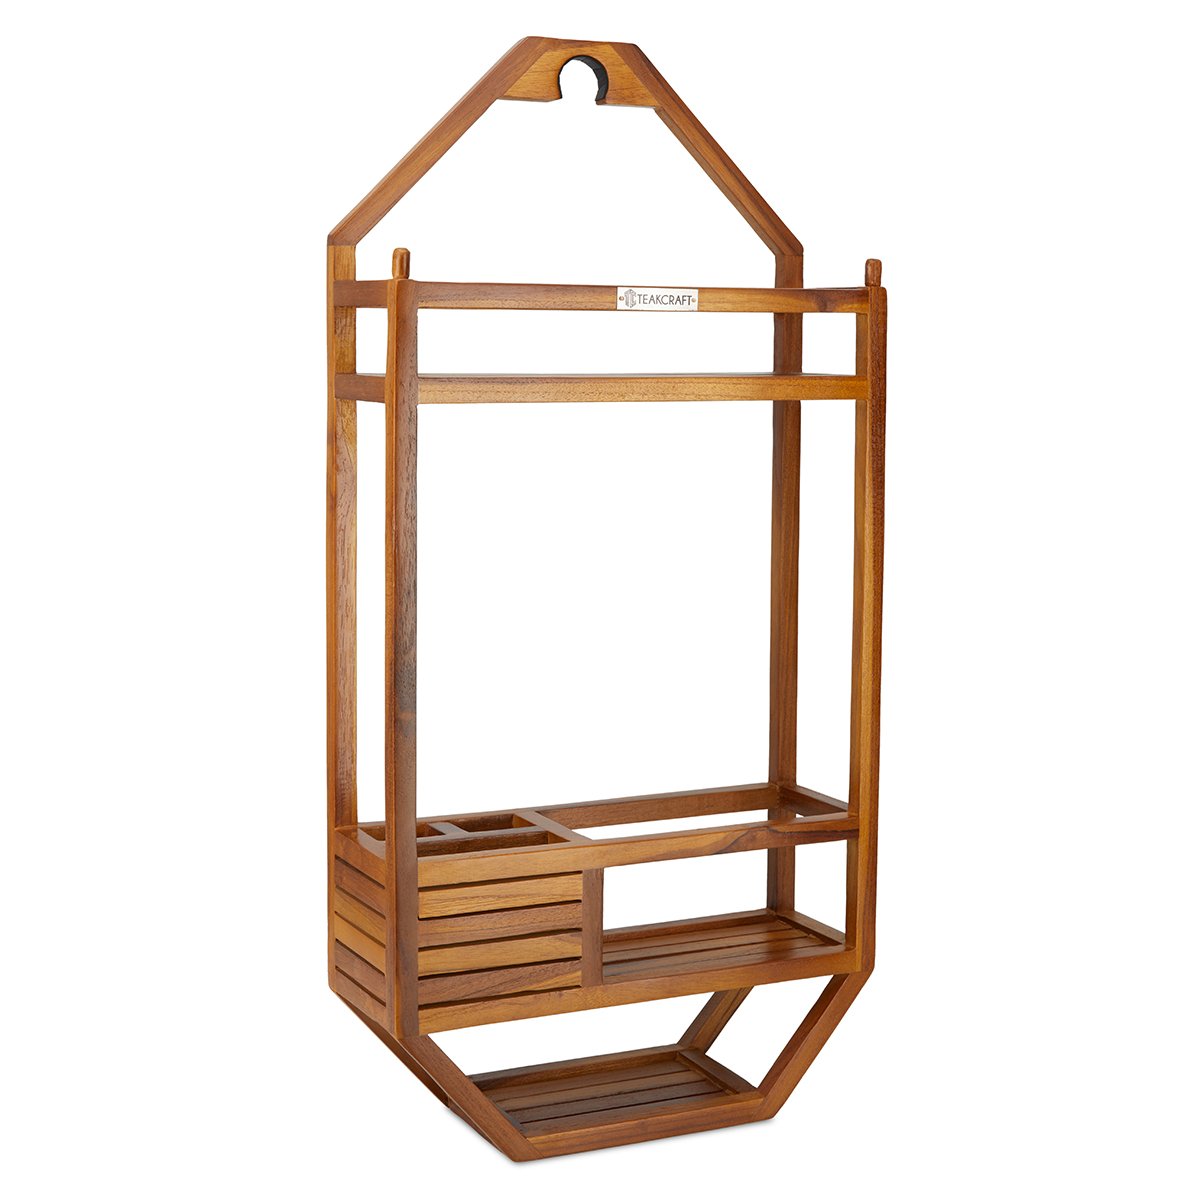 Utoplike Teak Shower Caddy Corner, 3 Tier Standing Shower Organizer Shelf  with Handle, Wood Bathroom Stand Up Caddy Basket for Shampoo, Rack for